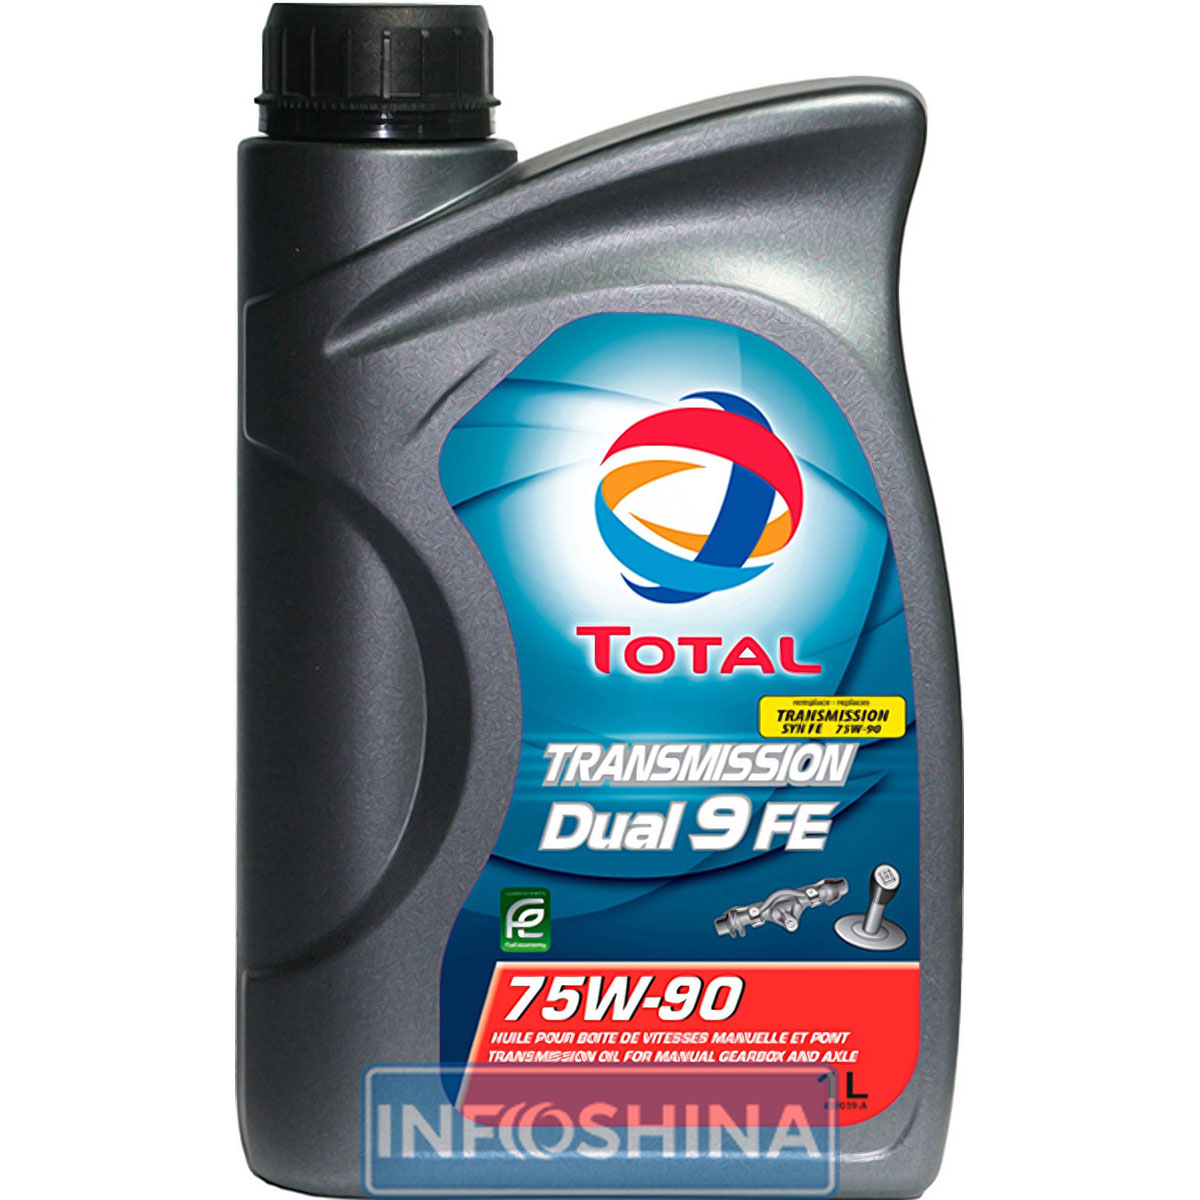 Купить масло Total Transmission Dual 9 FE 75W-90 (1л)